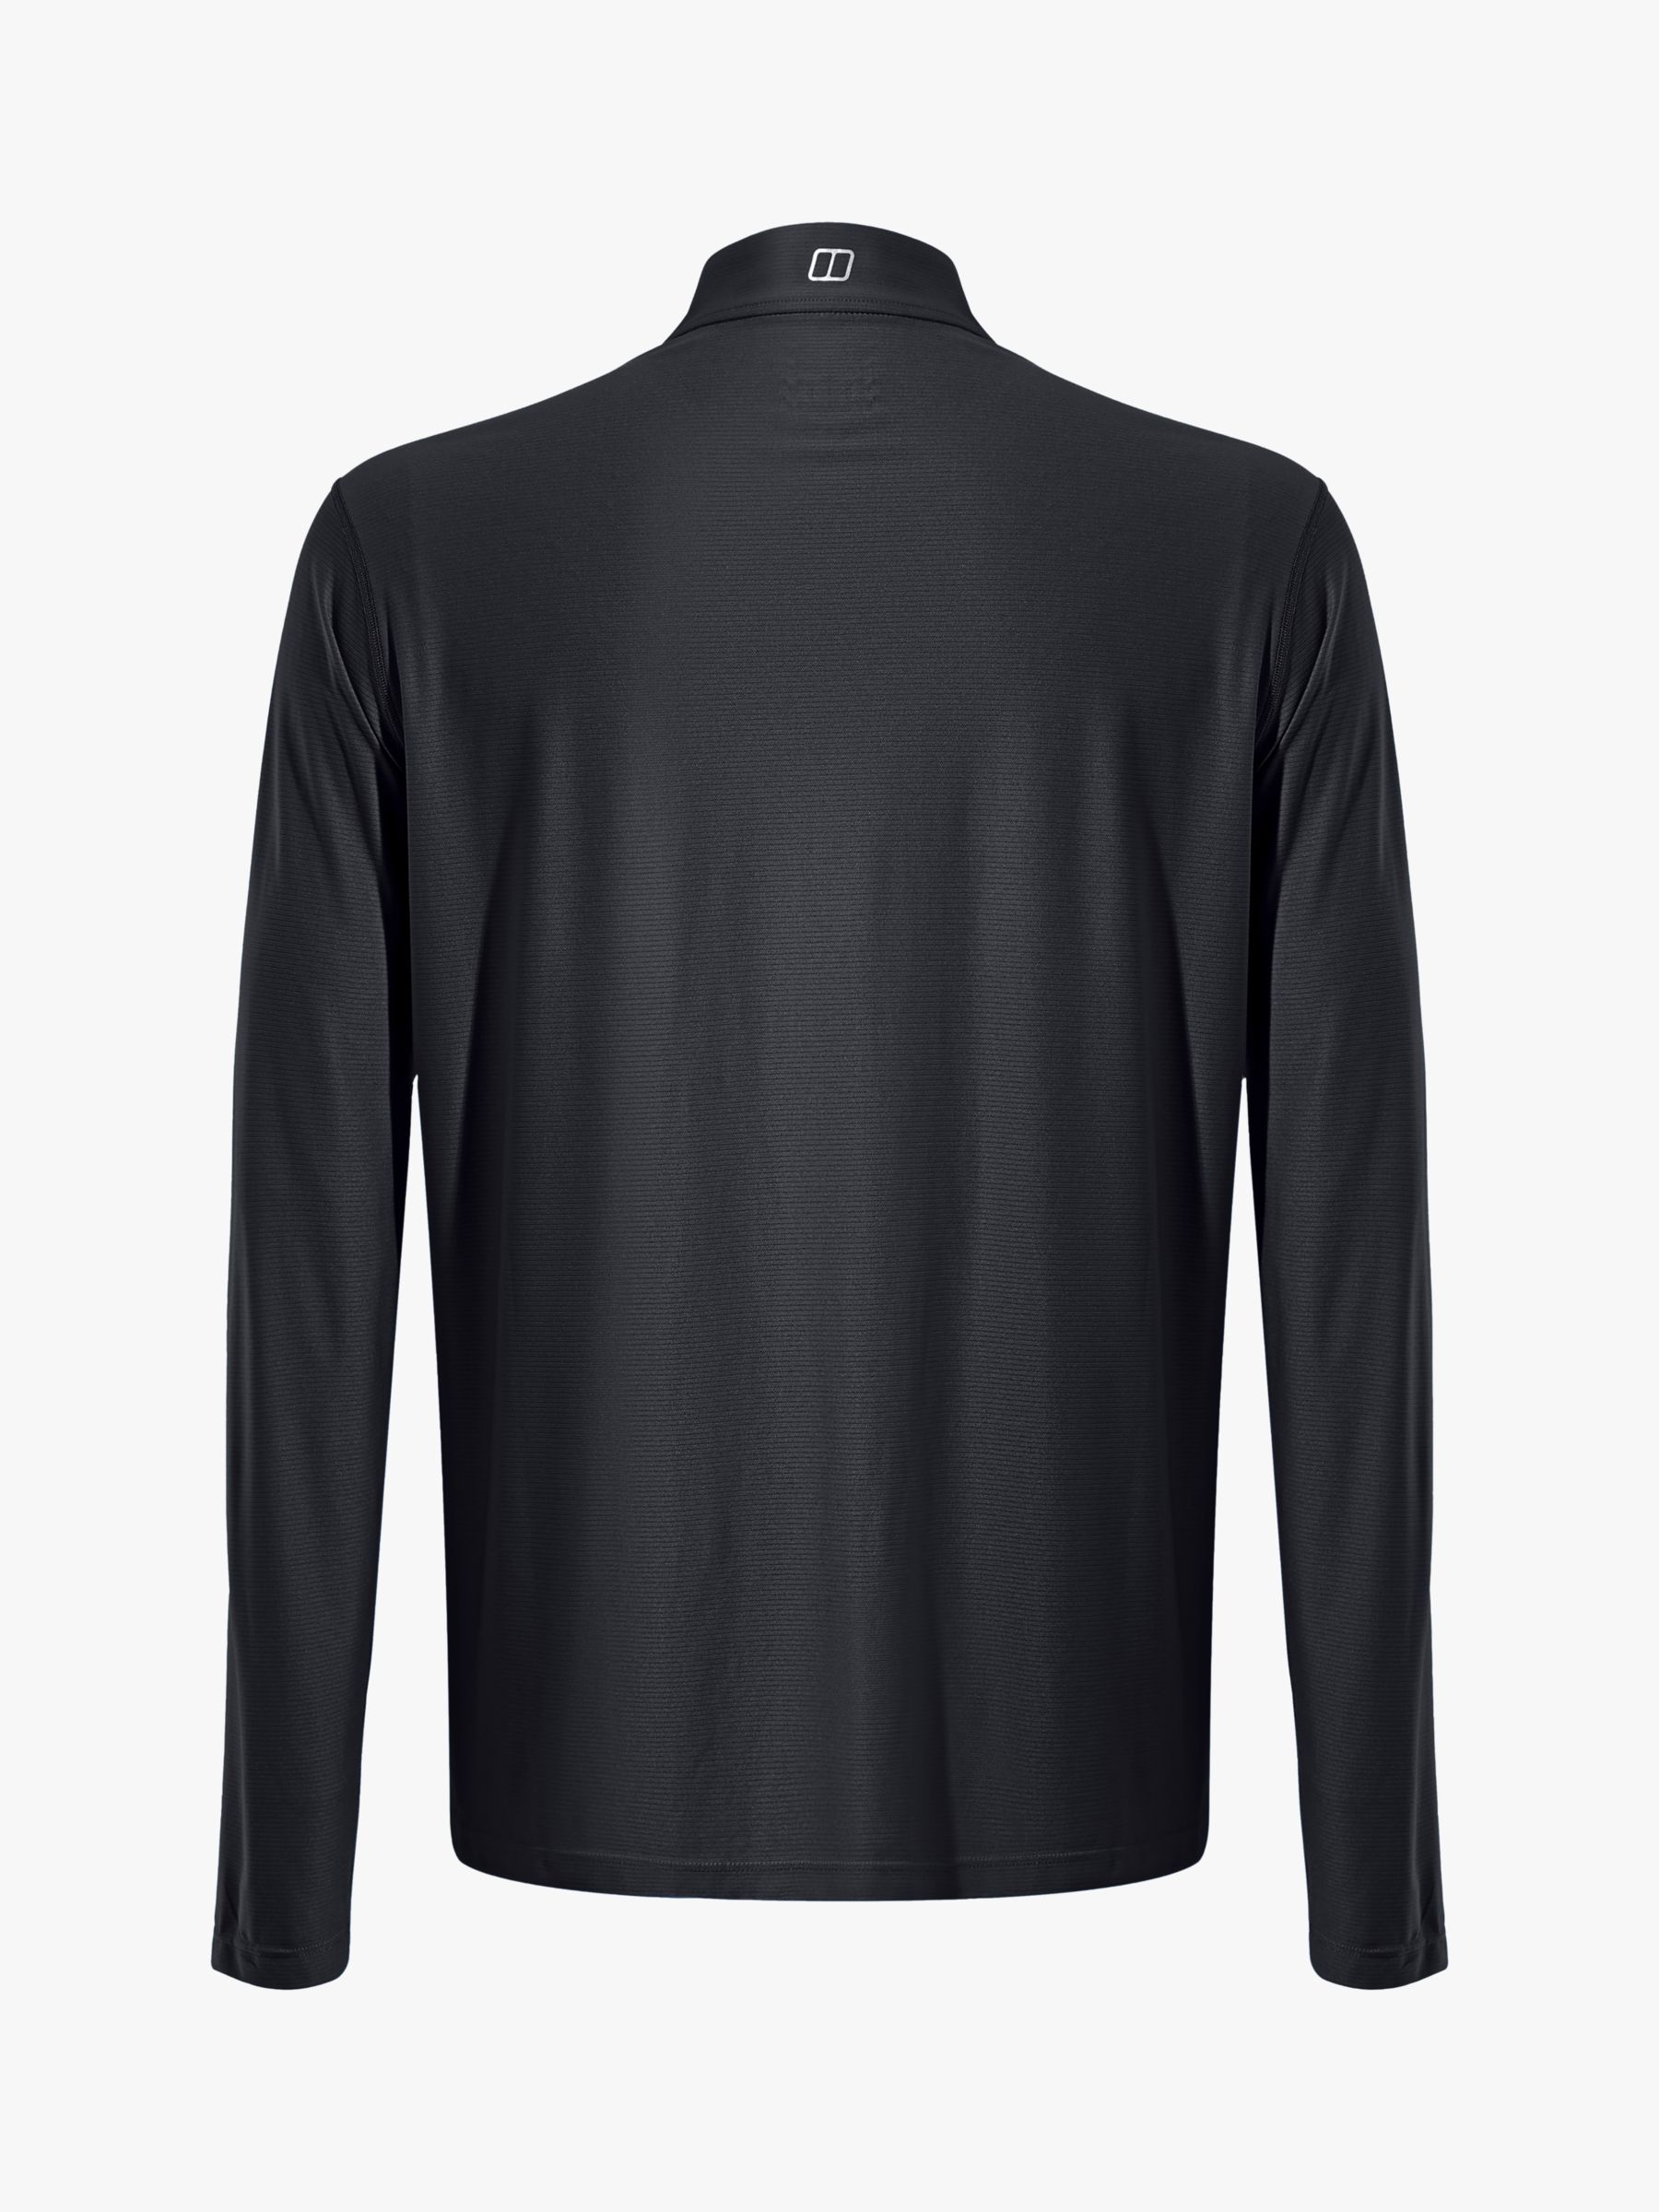 Berghaus 24/7 Long Sleeve Full Zip Top, Jet Black, XL